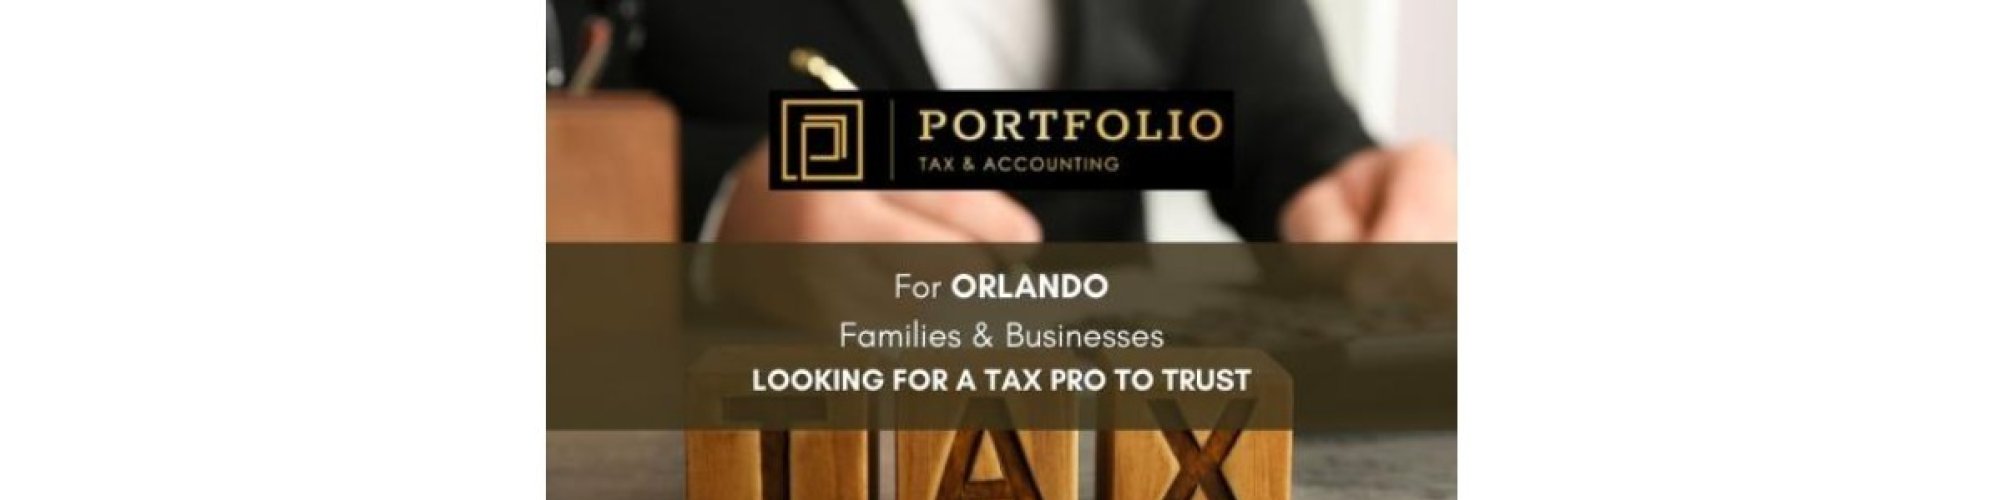 Portfolio Tax and Accounting